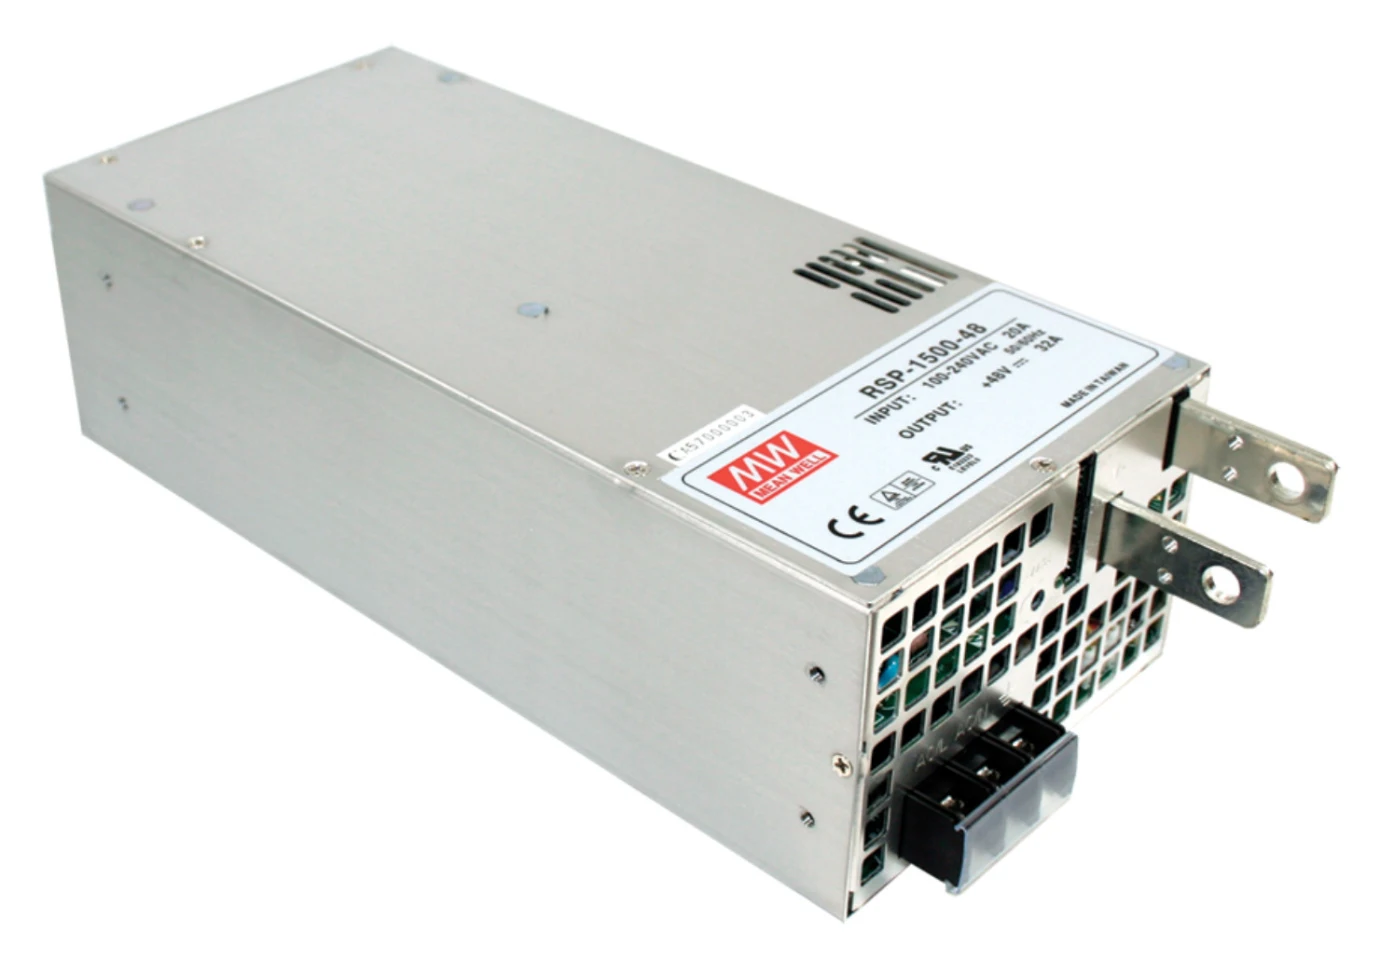 

transmit MEAN WELL Taiwan RSP-1500W 5V/12V/15V/24V/27V/48V parallel high-power PFC switching power supply